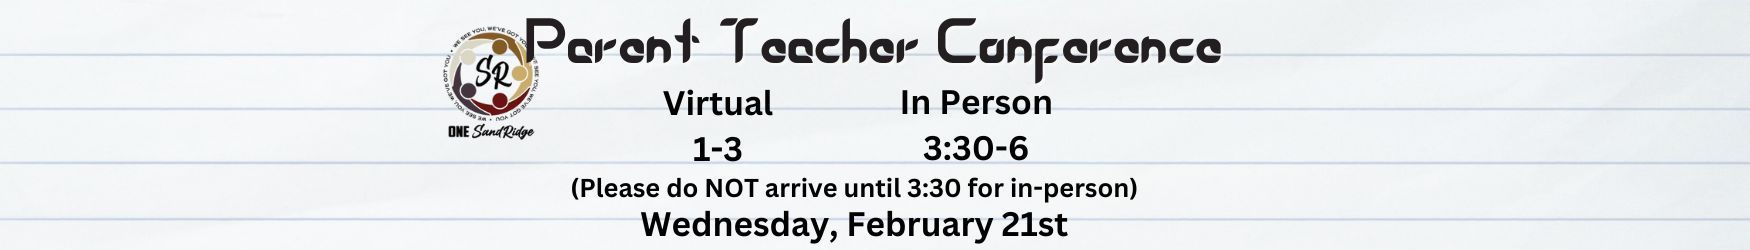 Parent Teacher Conference Feb 21 1-3 virtual 330-6 in person